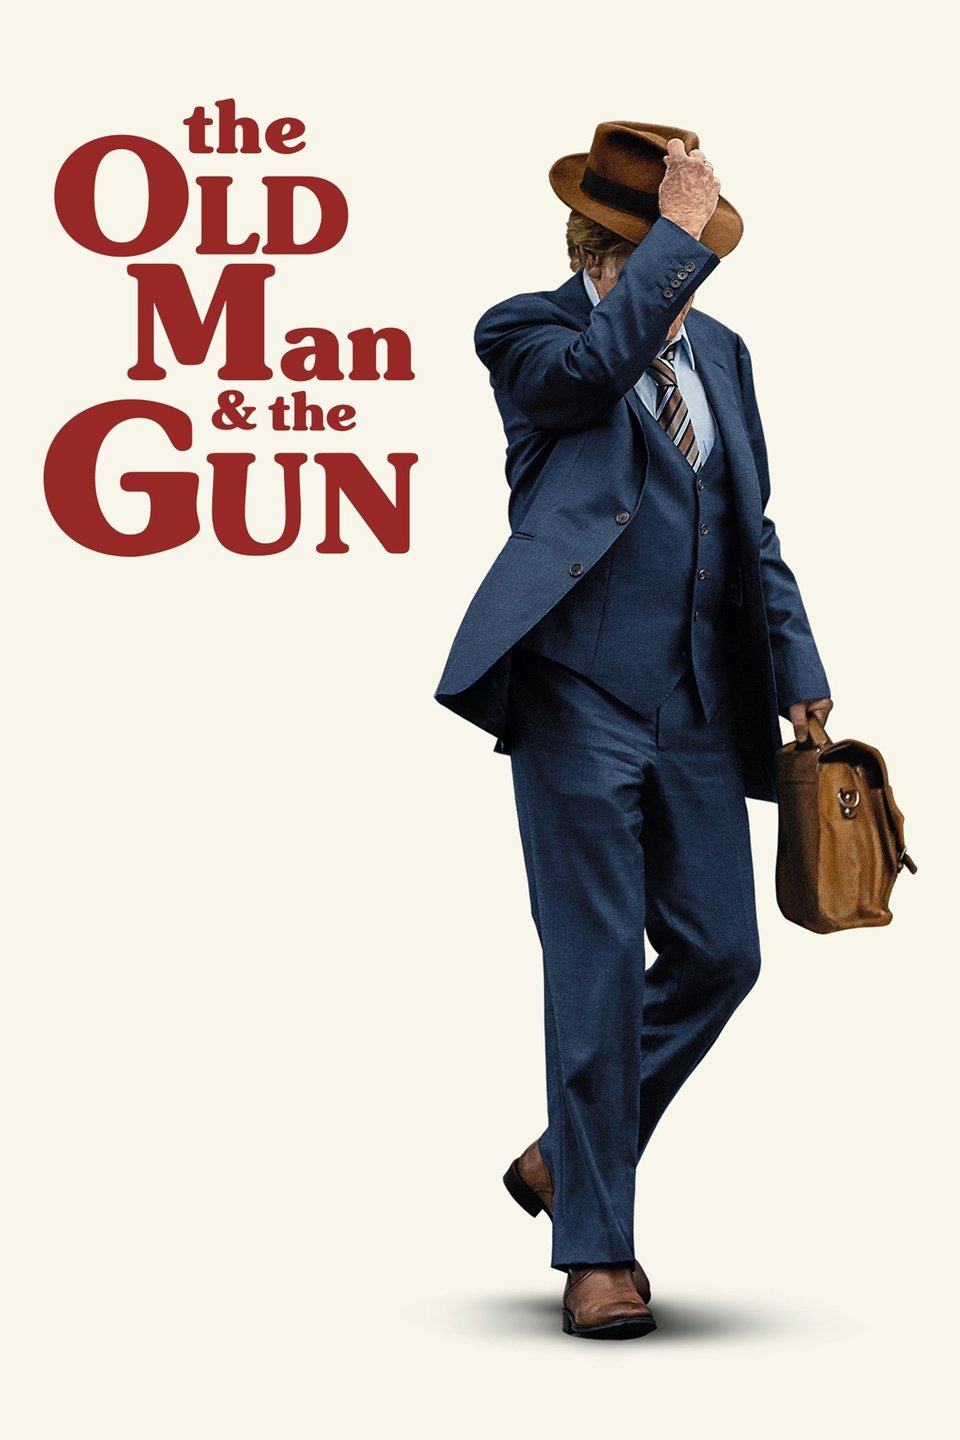 The Old Man & the Gun (2018) ★★☆☆☆